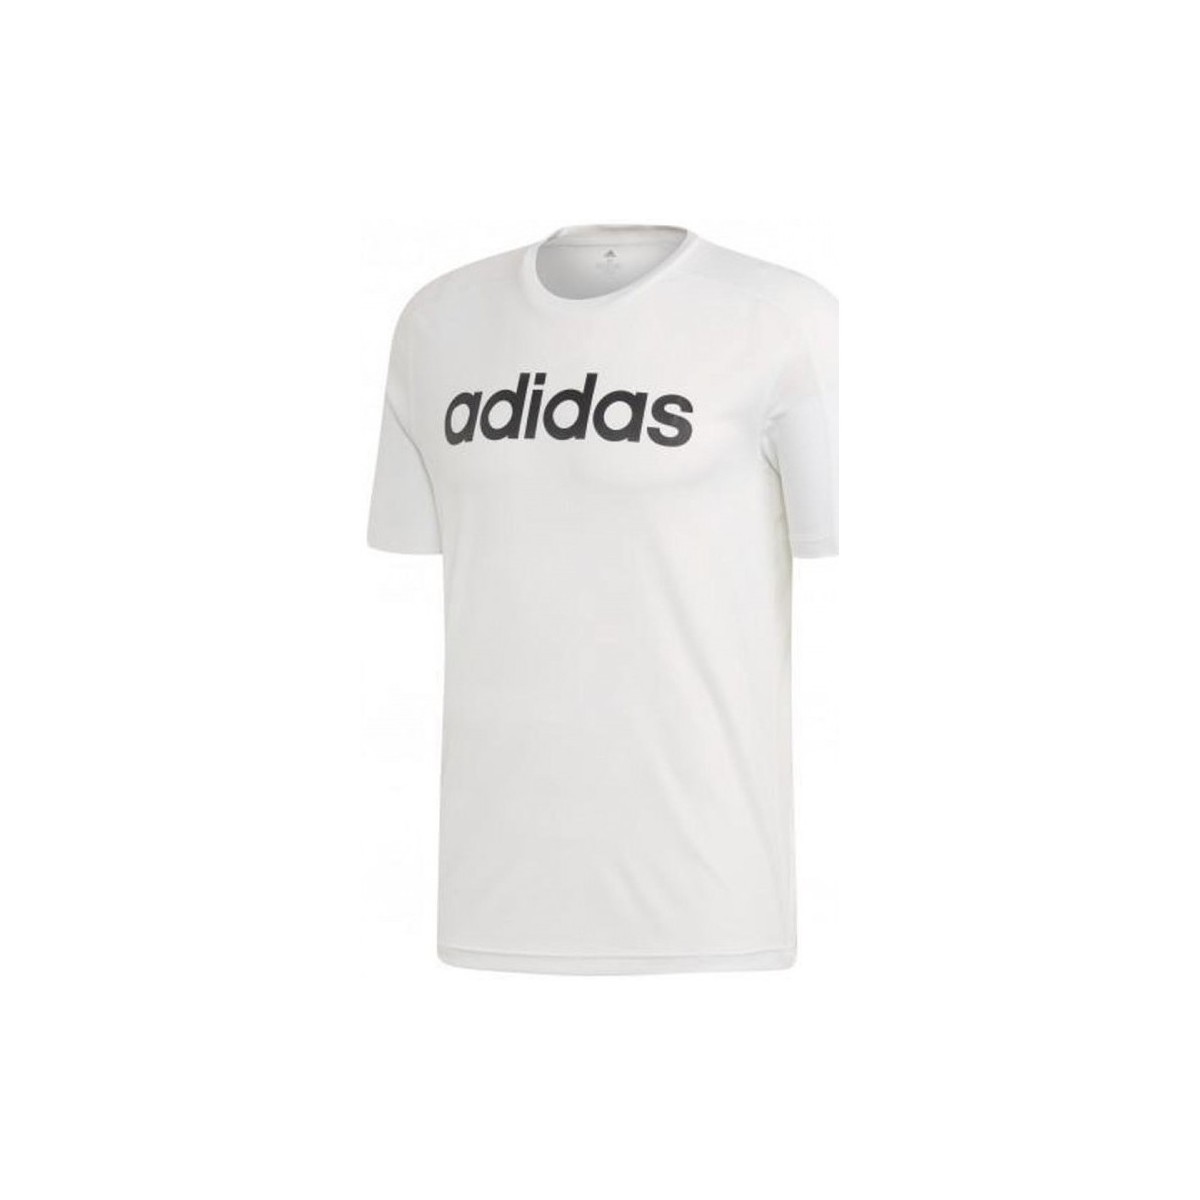 Textiel Heren T-shirts & Polo’s adidas Originals D2M Cool Logo T Wit